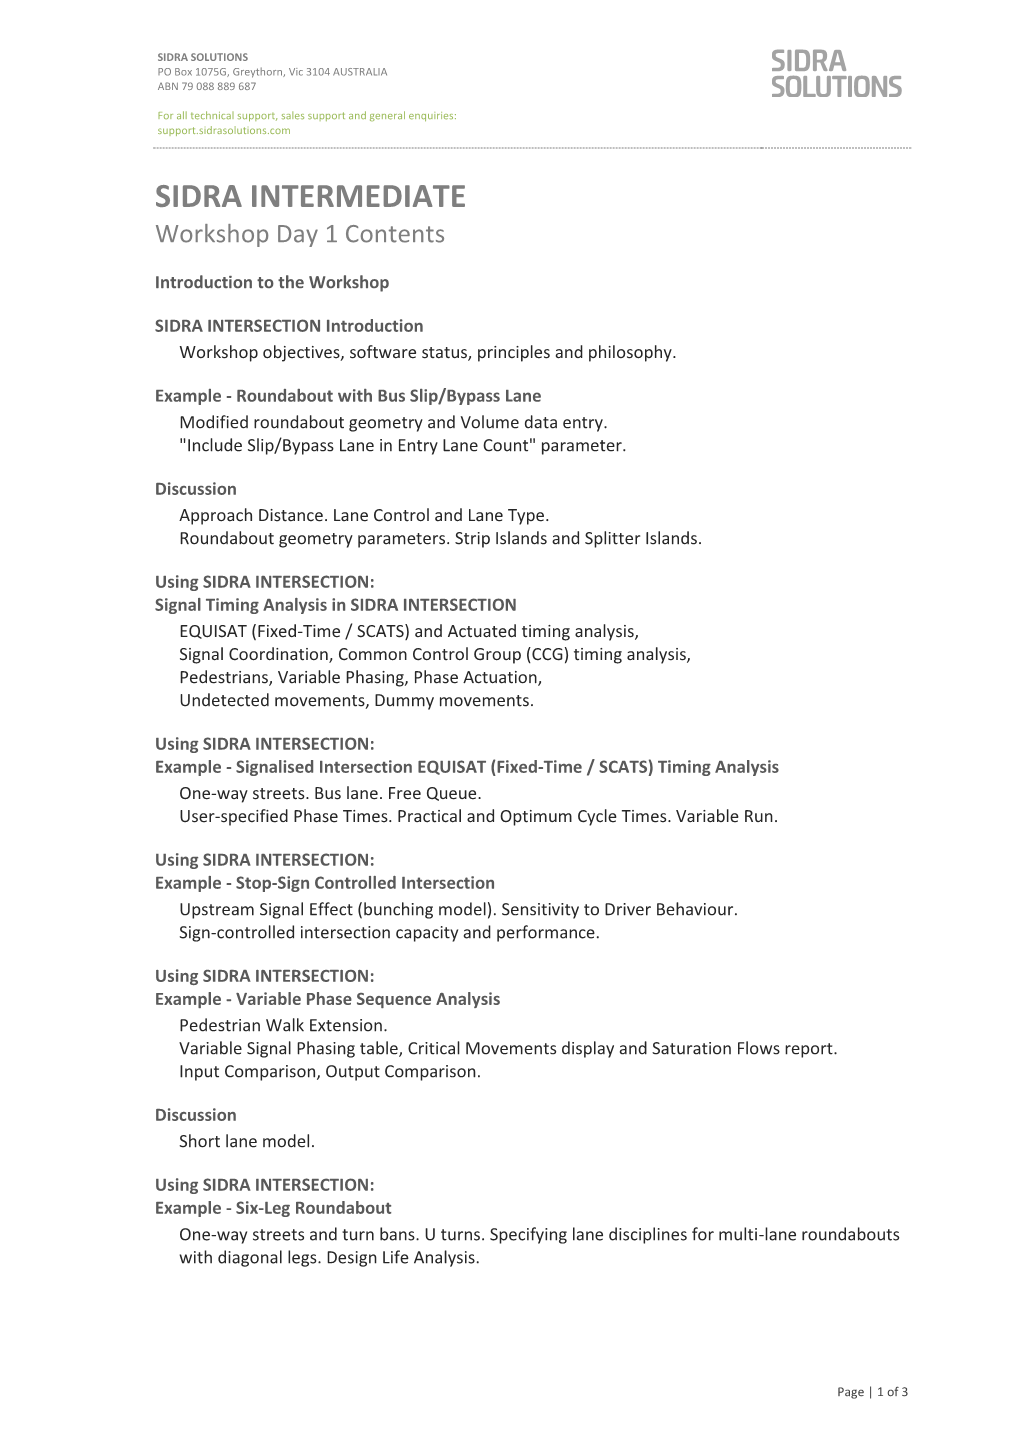 SIDRA INTERSECTION BEGINNER Workshop Contents